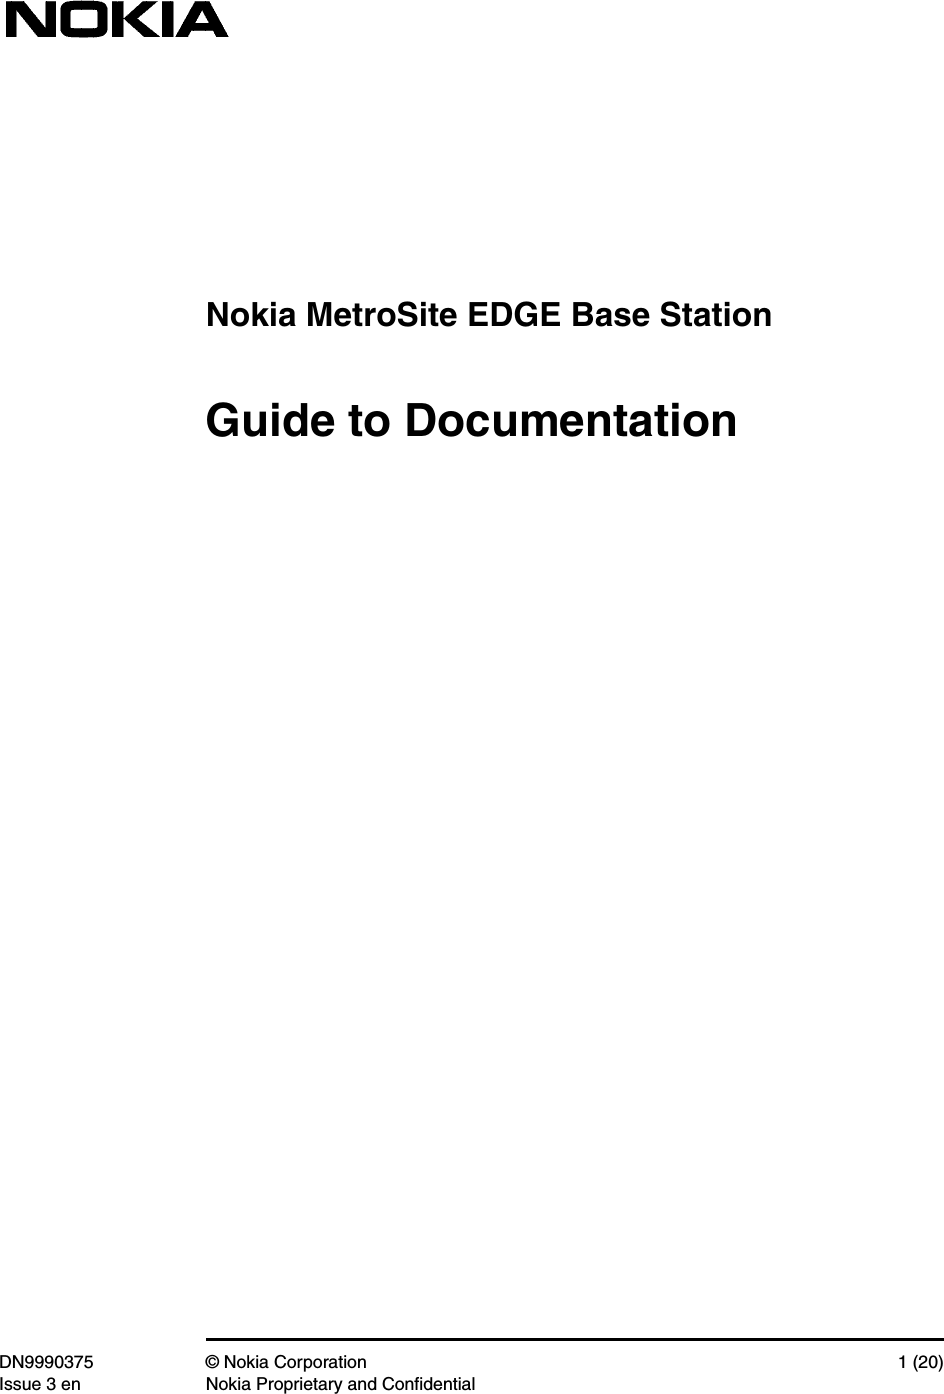 Nokia MetroSite EDGE Base StationDN9990375 © Nokia Corporation 1 (20)Issue 3 en Nokia Proprietary and ConfidentialGuide to Documentation